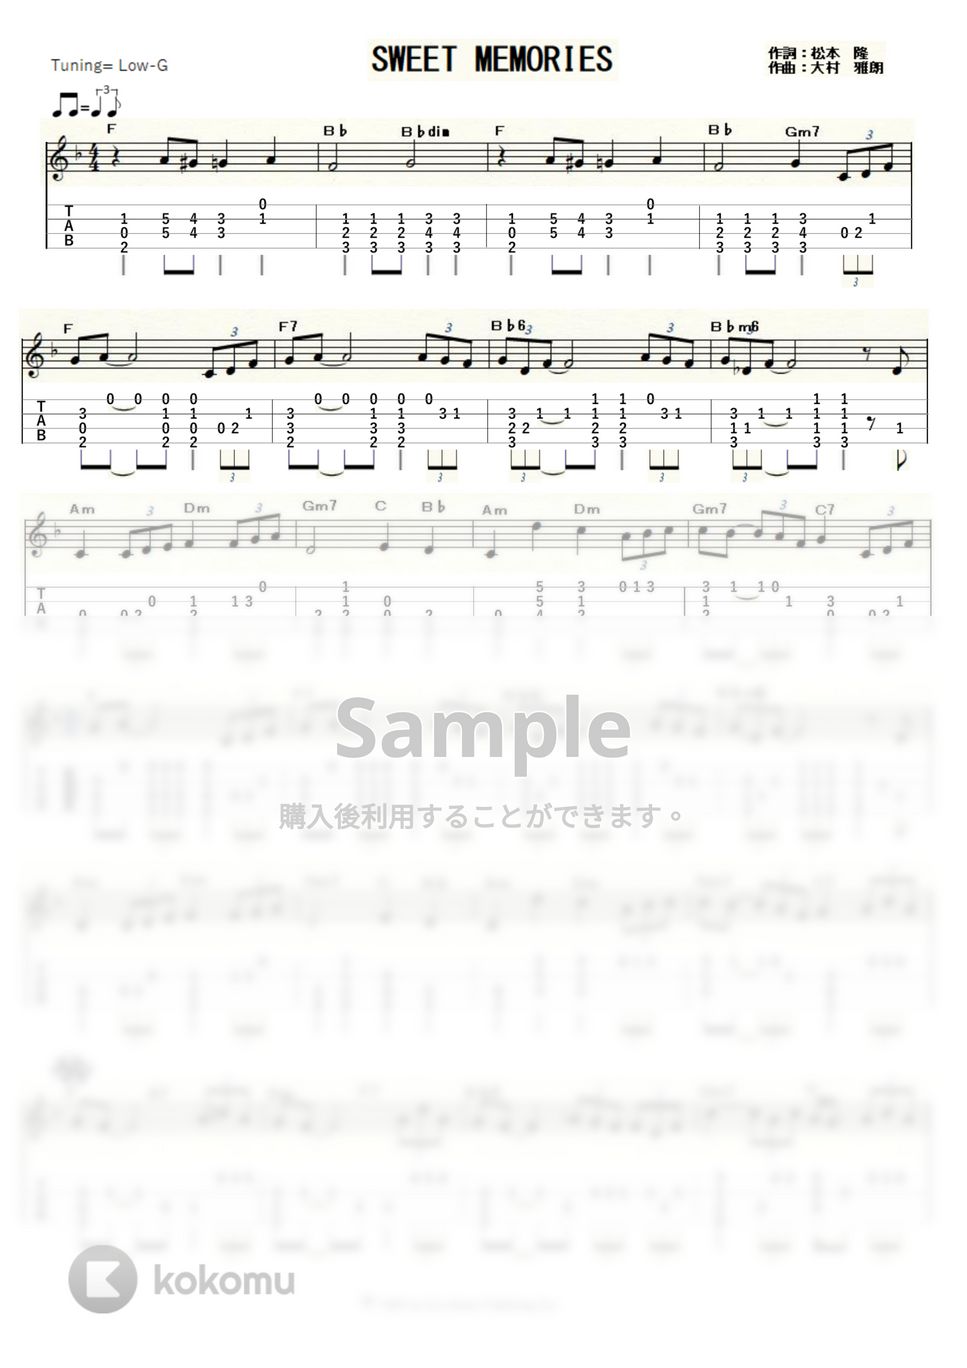 松田聖子 - SWEET MEMORIES (ｳｸﾚﾚｿﾛ / Low-G / 中級) by ukulelepapa